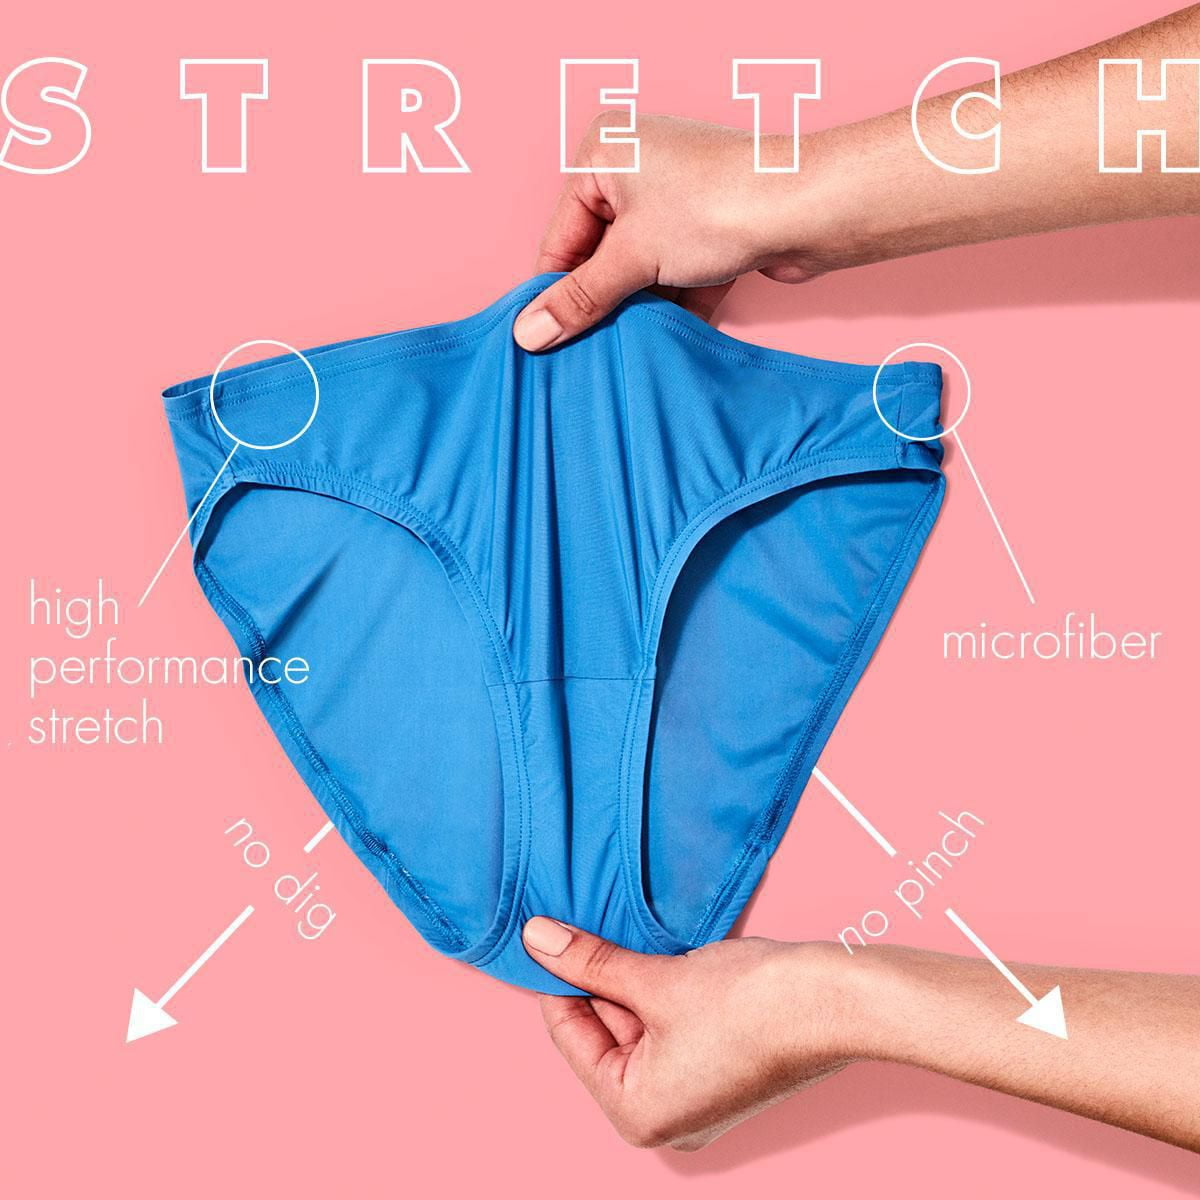 Fruit of the Loom Women's 360 Stretch Microfiber Bikini Underwear, 6 Pack